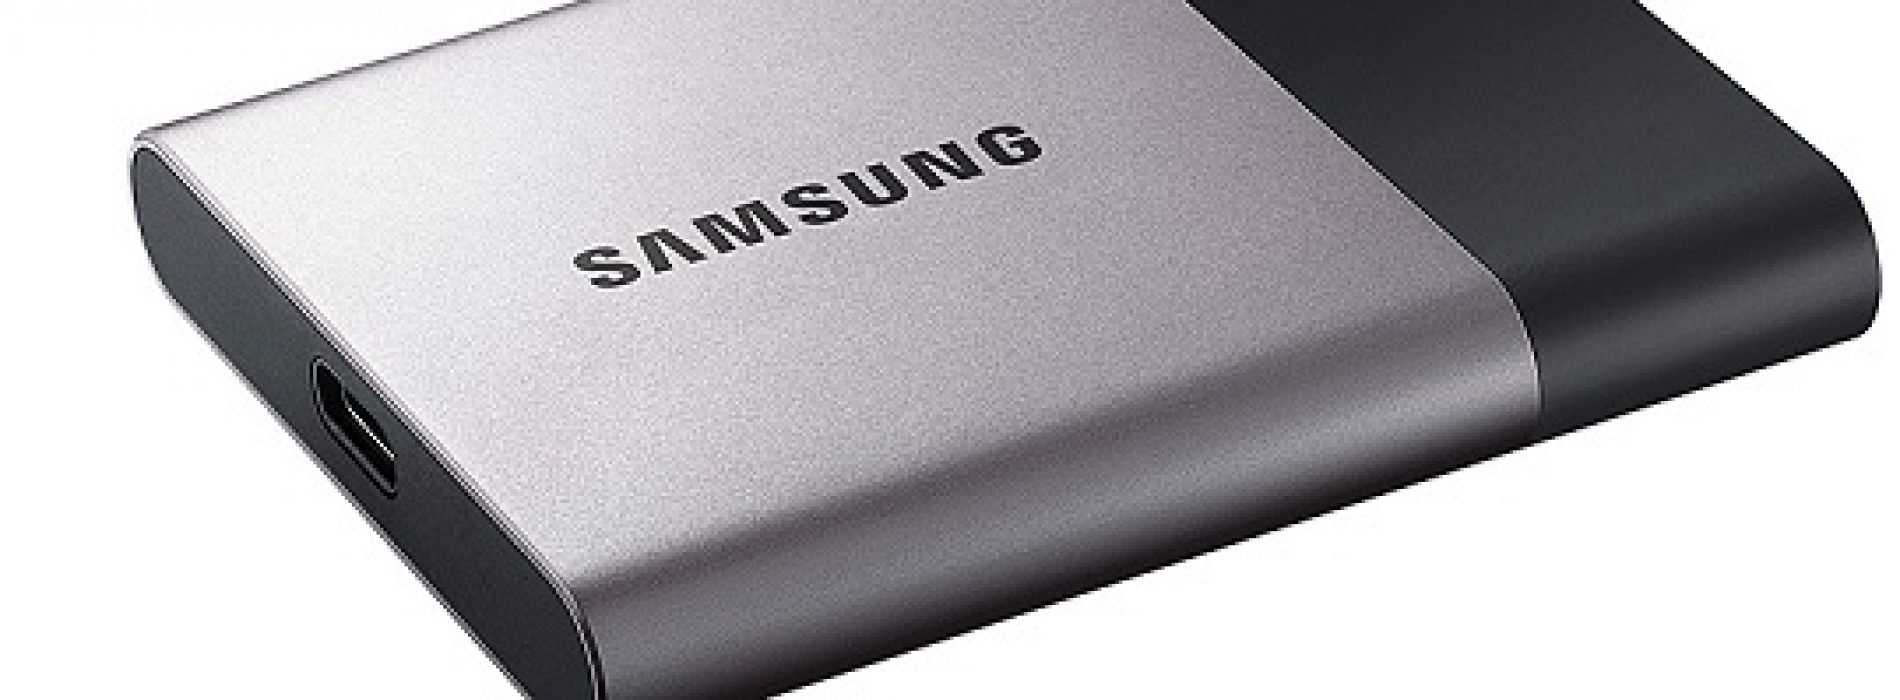 Samsung Portable SSD T3 500GB